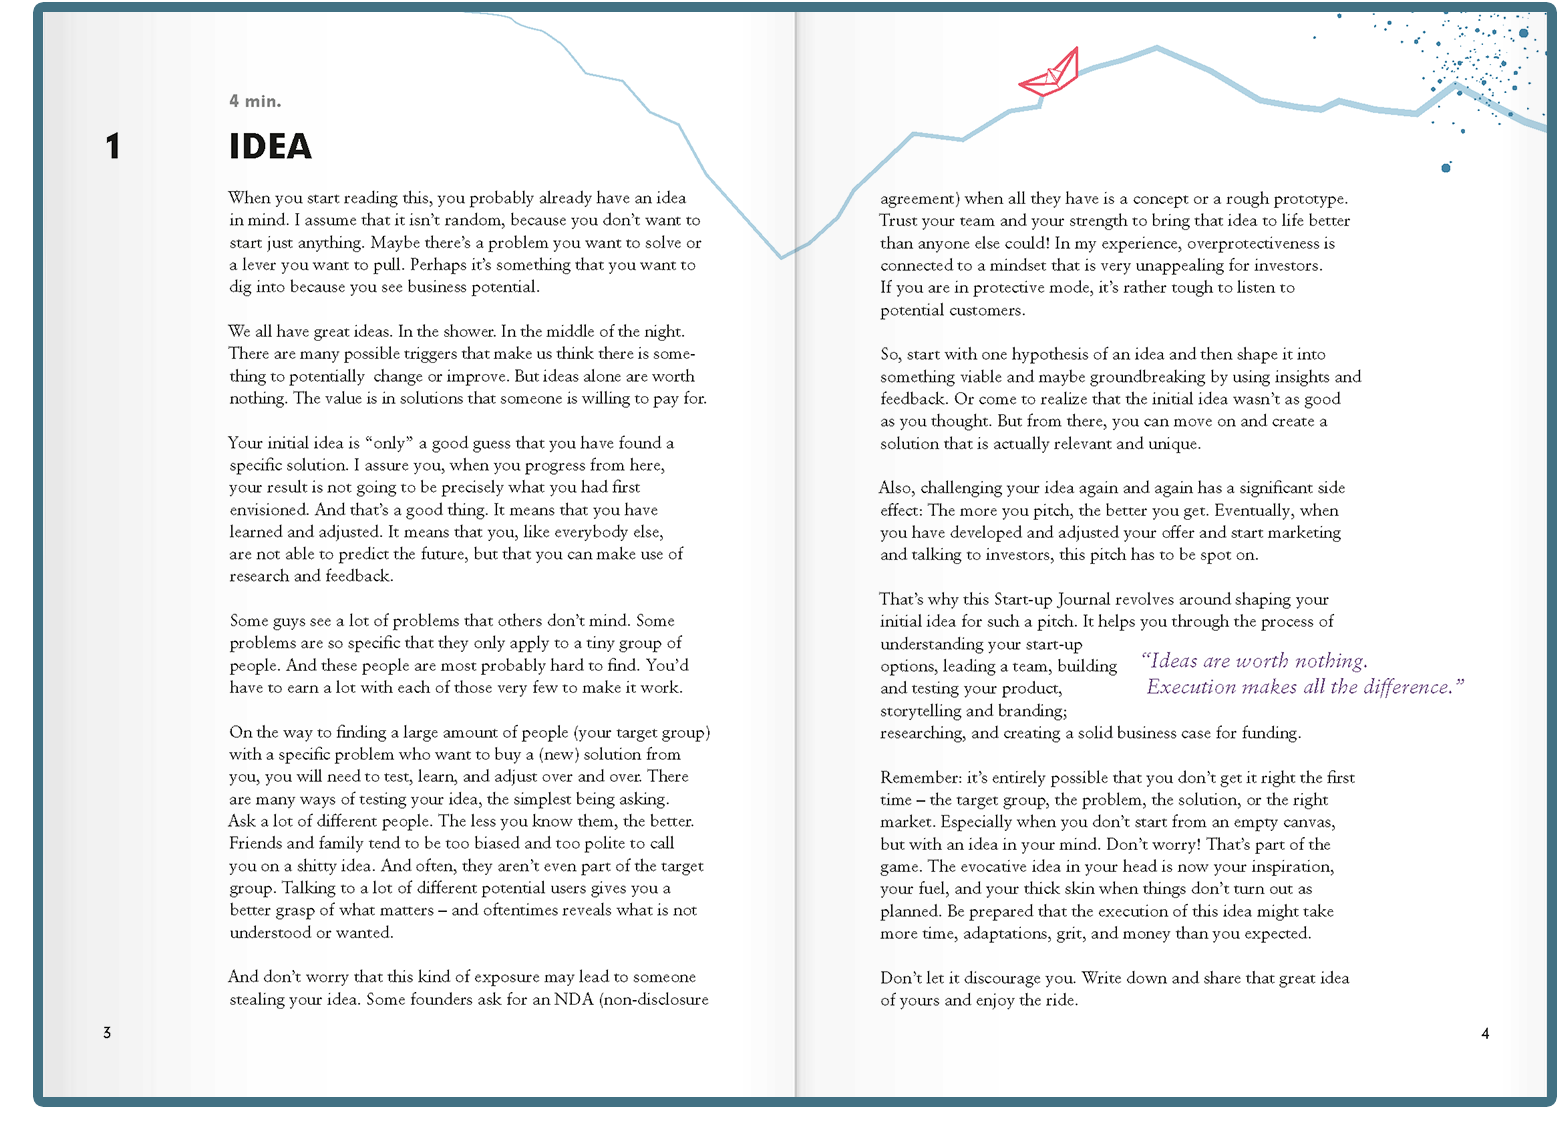 Start-up Journal Preview Chapter 1: Idea